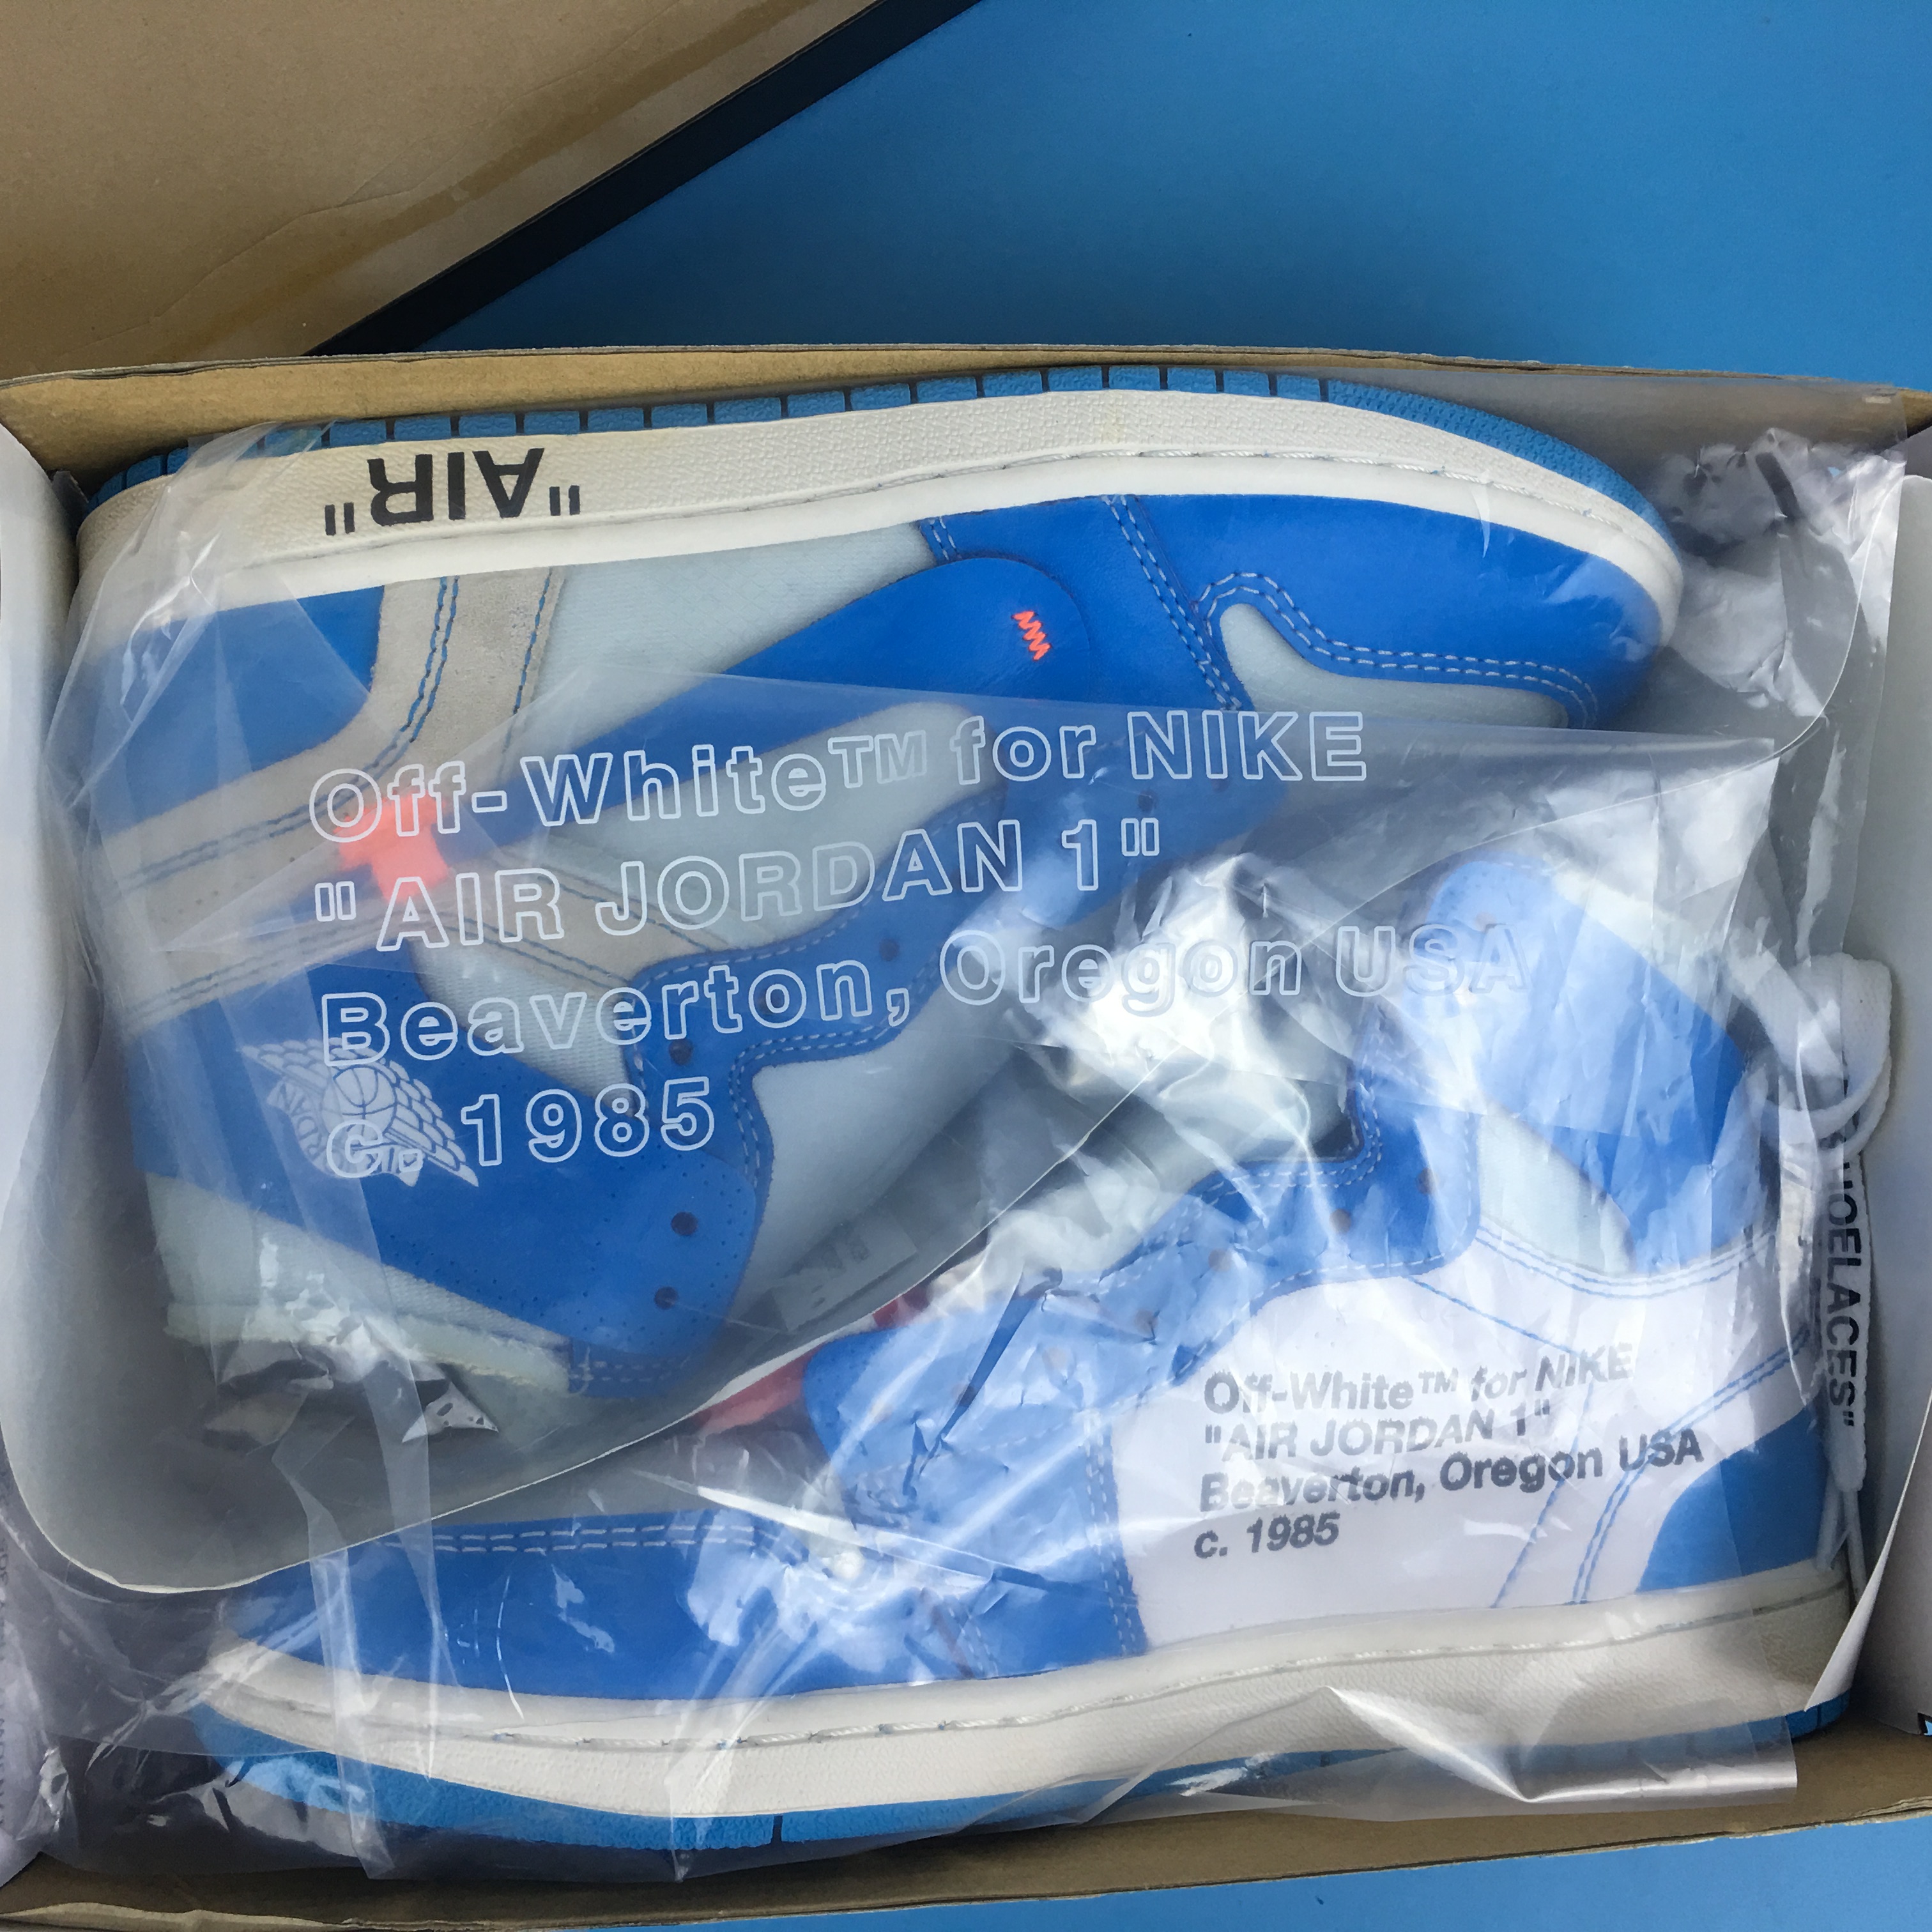 OFF-WHITE x Air Jordan 1 Powder Blue Shoes - Click Image to Close